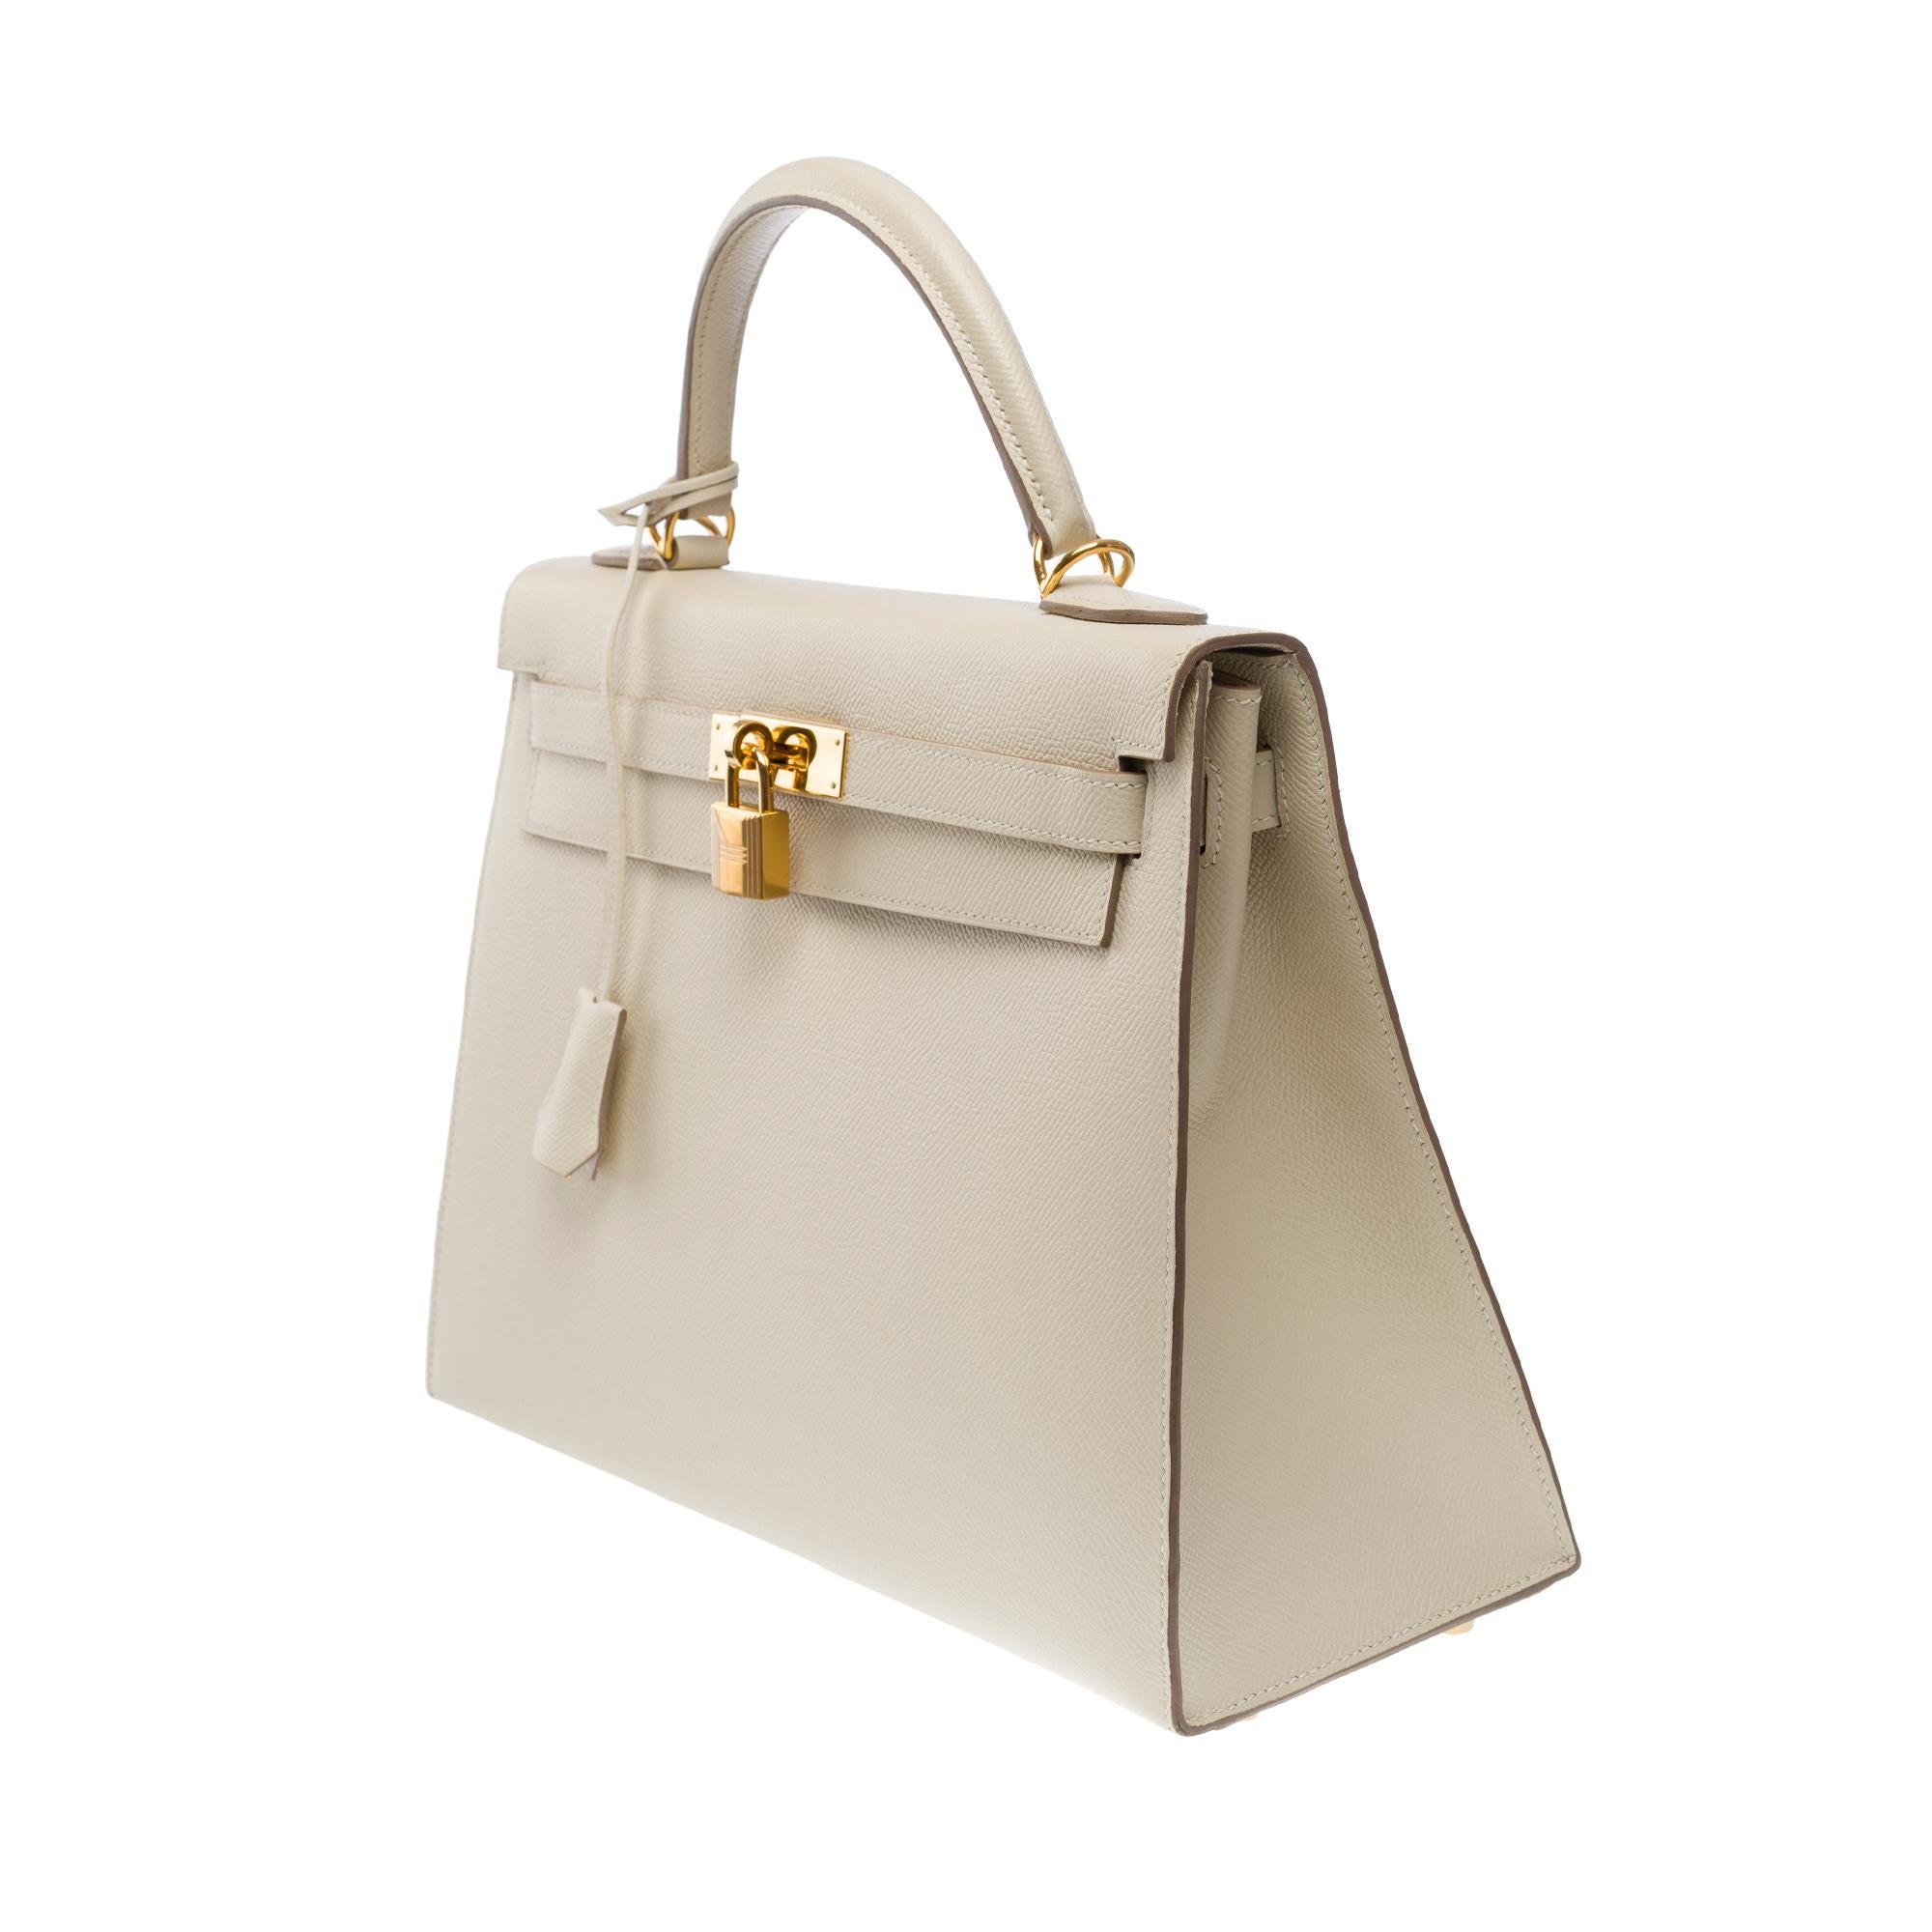 Stunning Hermès Kelly 32 sellier handbag strap in Craie epsom leather, GHW 2